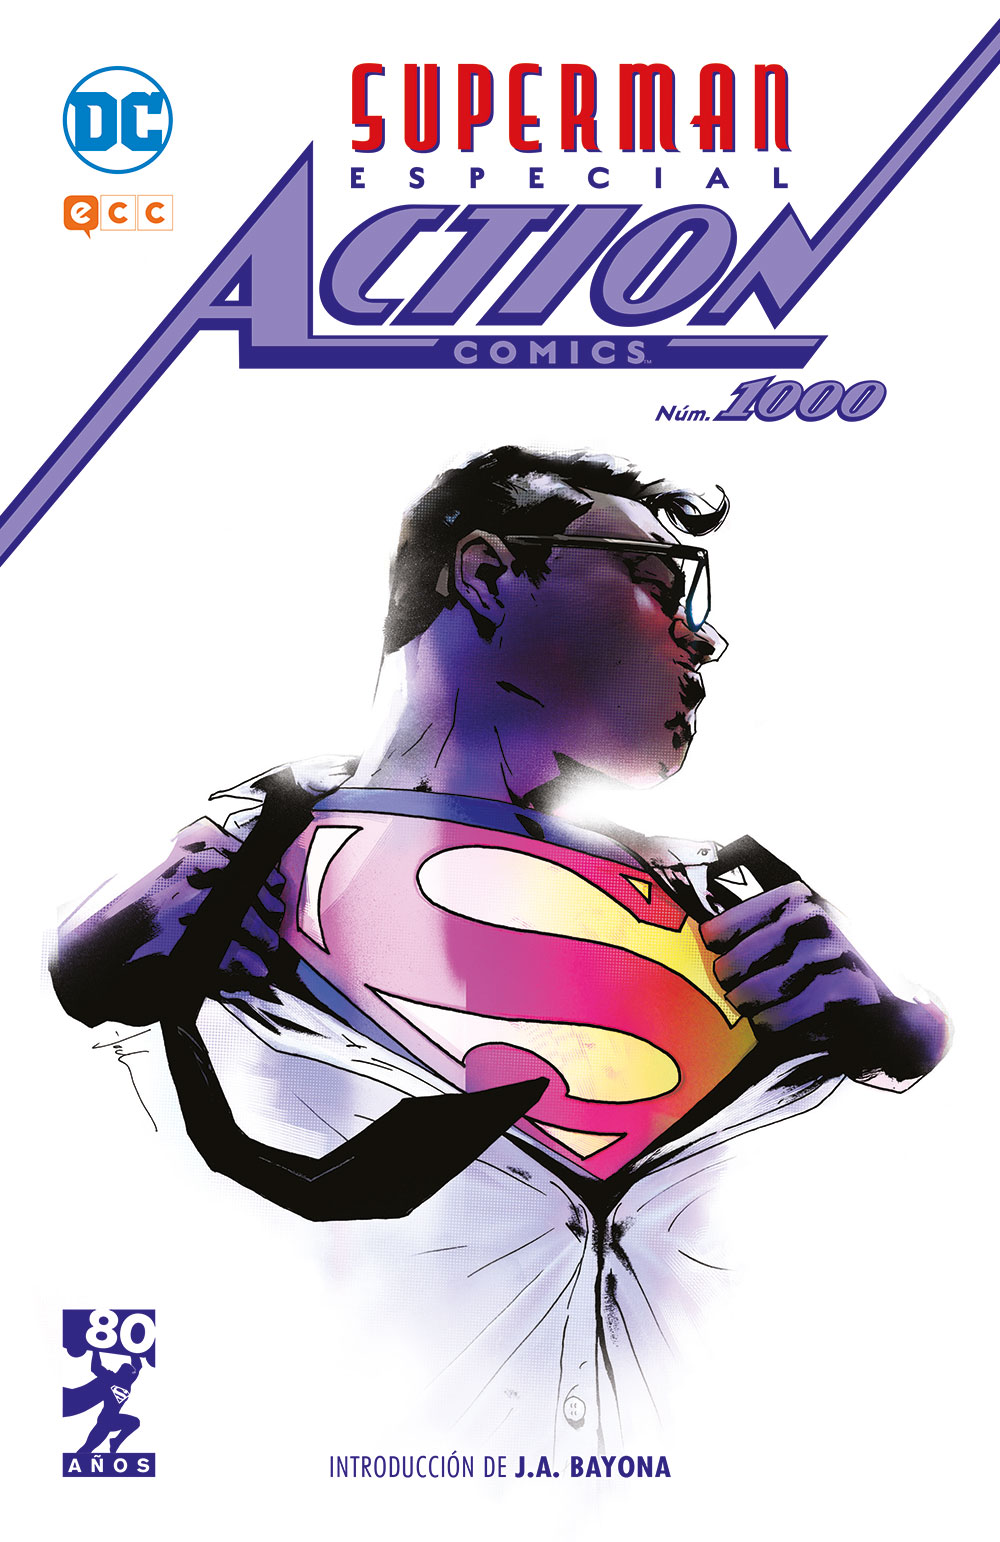 UN POCO DE NOVENO ARTE - Página 14 PORTADA_JPG_WEB_superman_especial_action_comics_1000